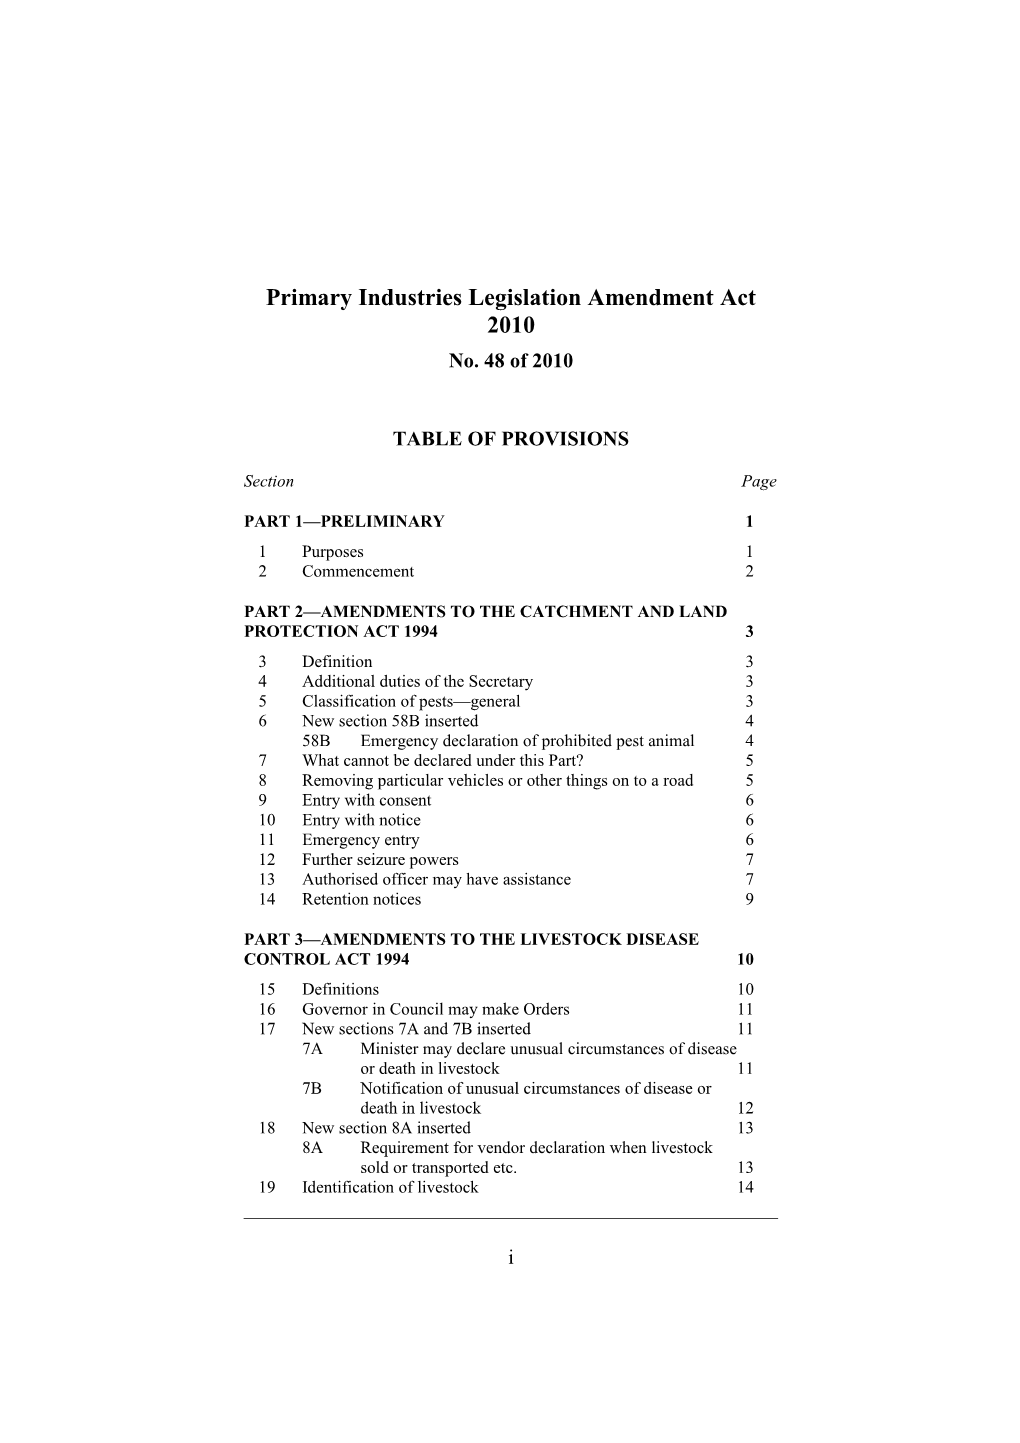 Primary Industries Legislation Amendment Act 2010